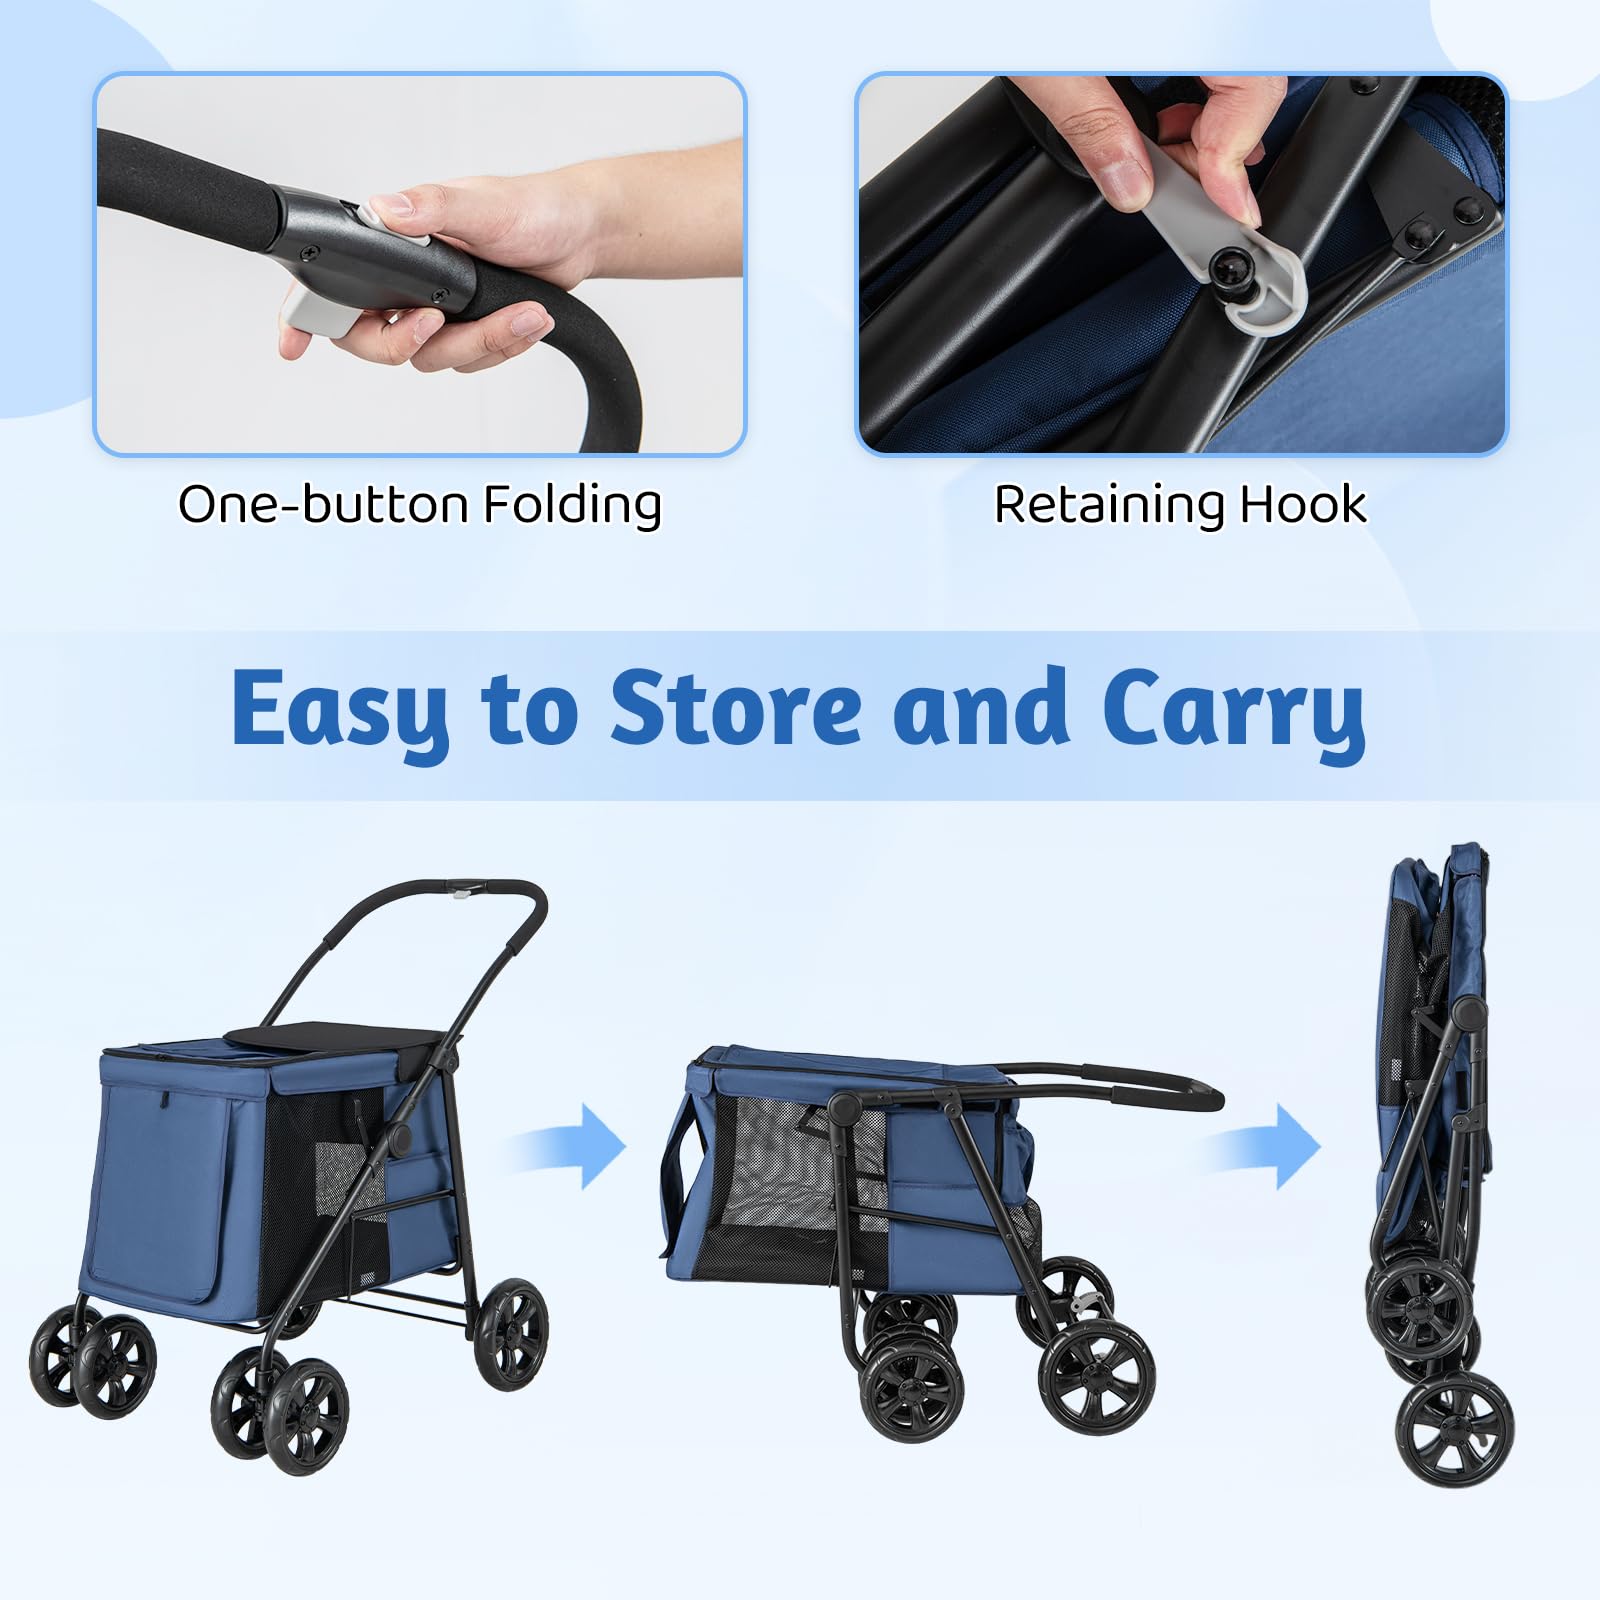 Giantex Dog Stroller, One-Button Folding Pet Stroller with 3 Entrances, 4 Shock-Absorbing Wheels